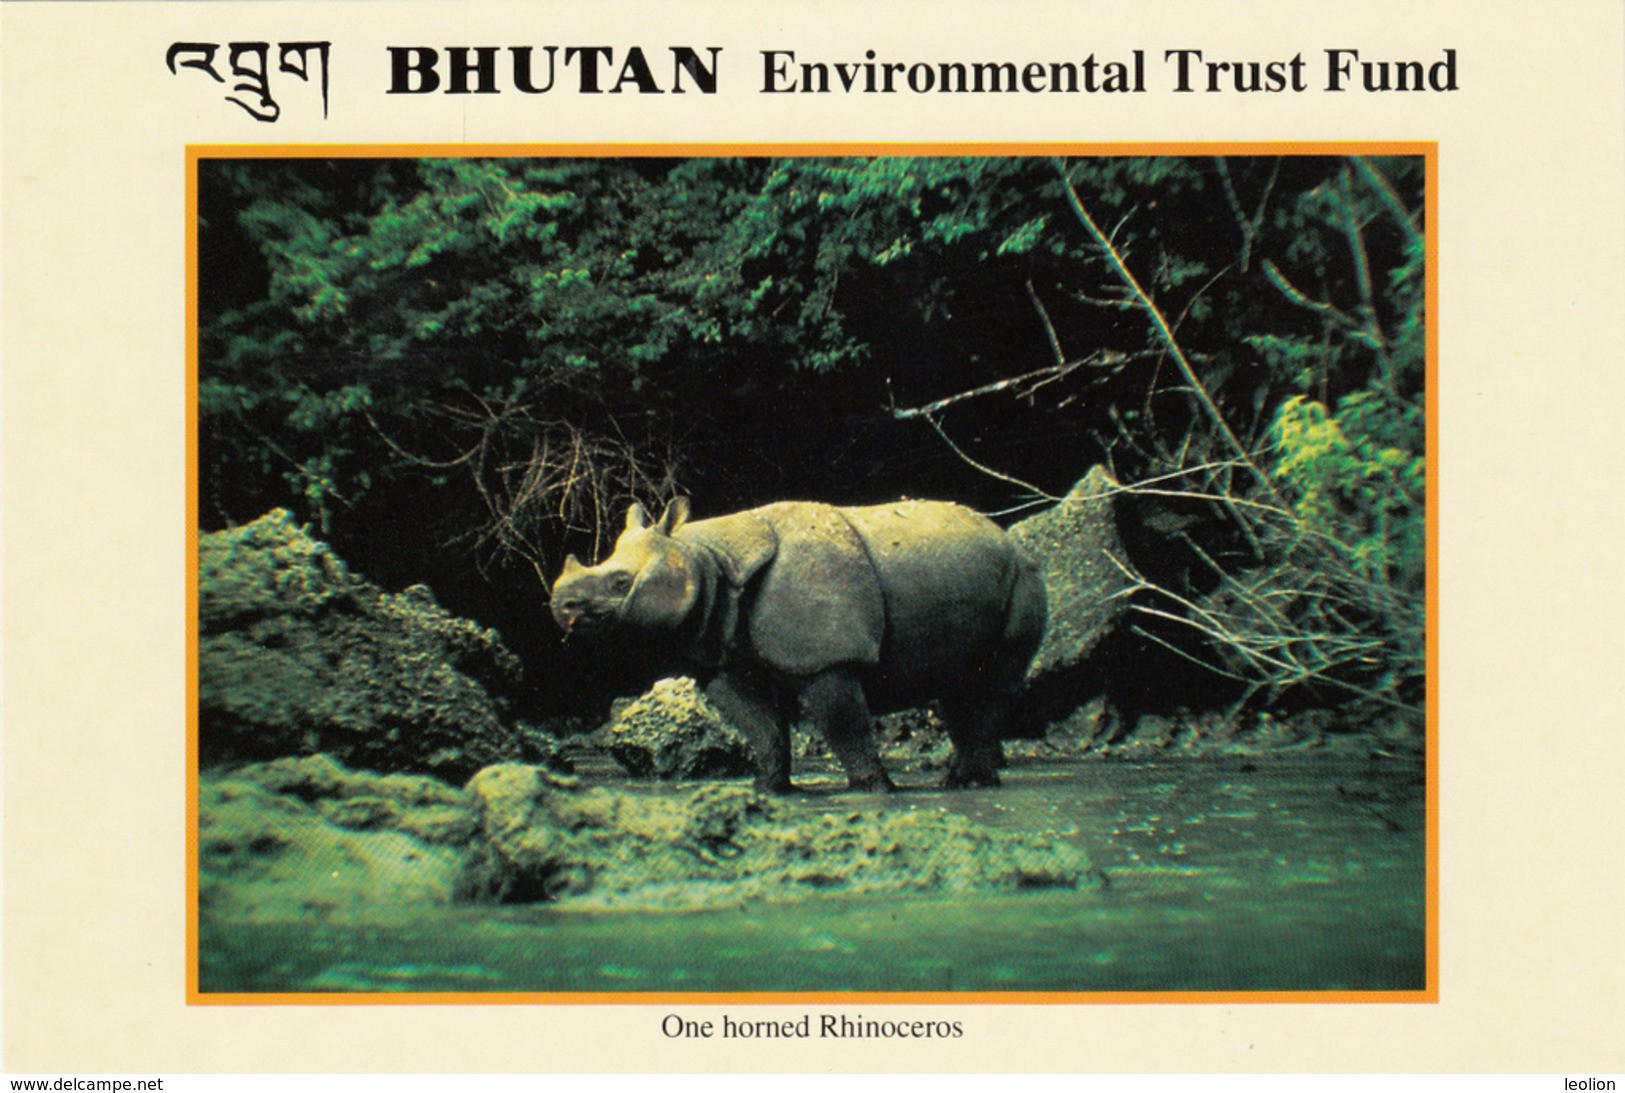 BHUTAN Post 1993 set of 17 Environmental Trust Fund Postcards, unused in cover